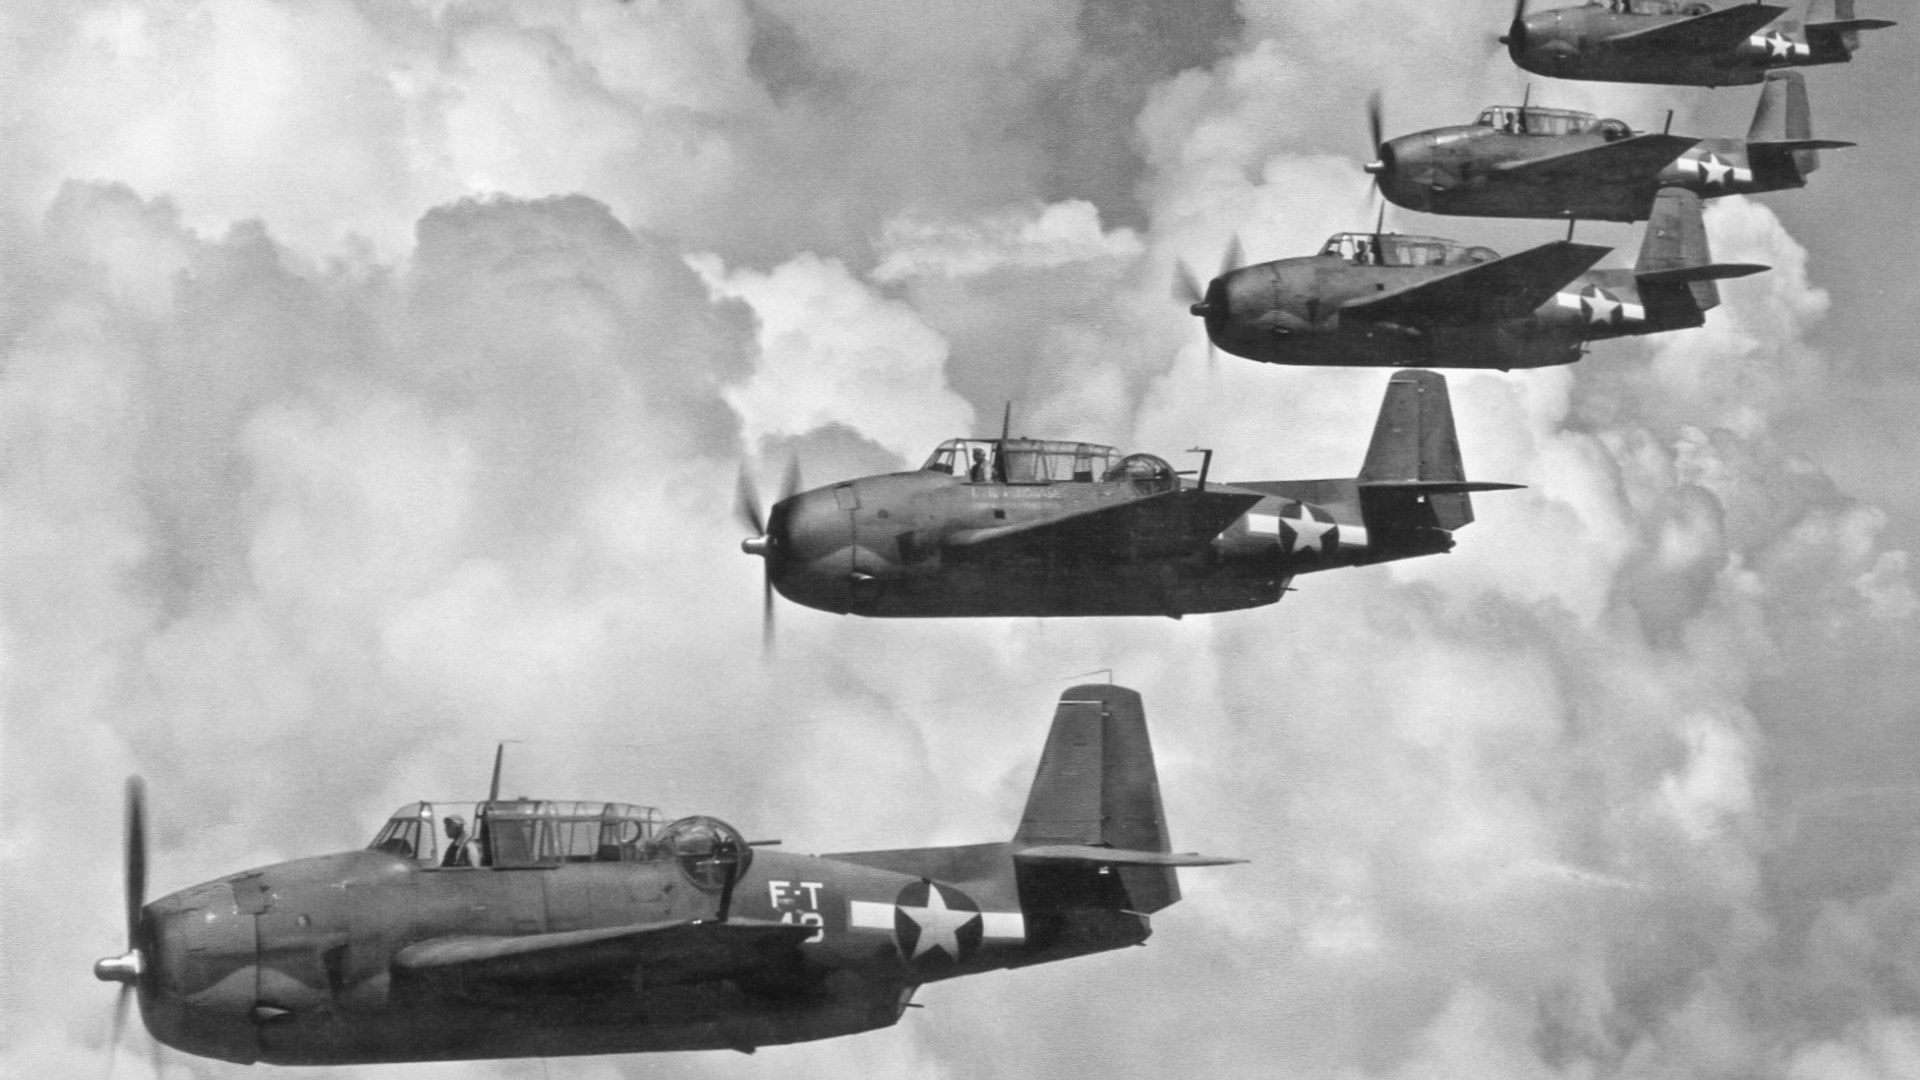 Five Avenger Torpedo Bombers